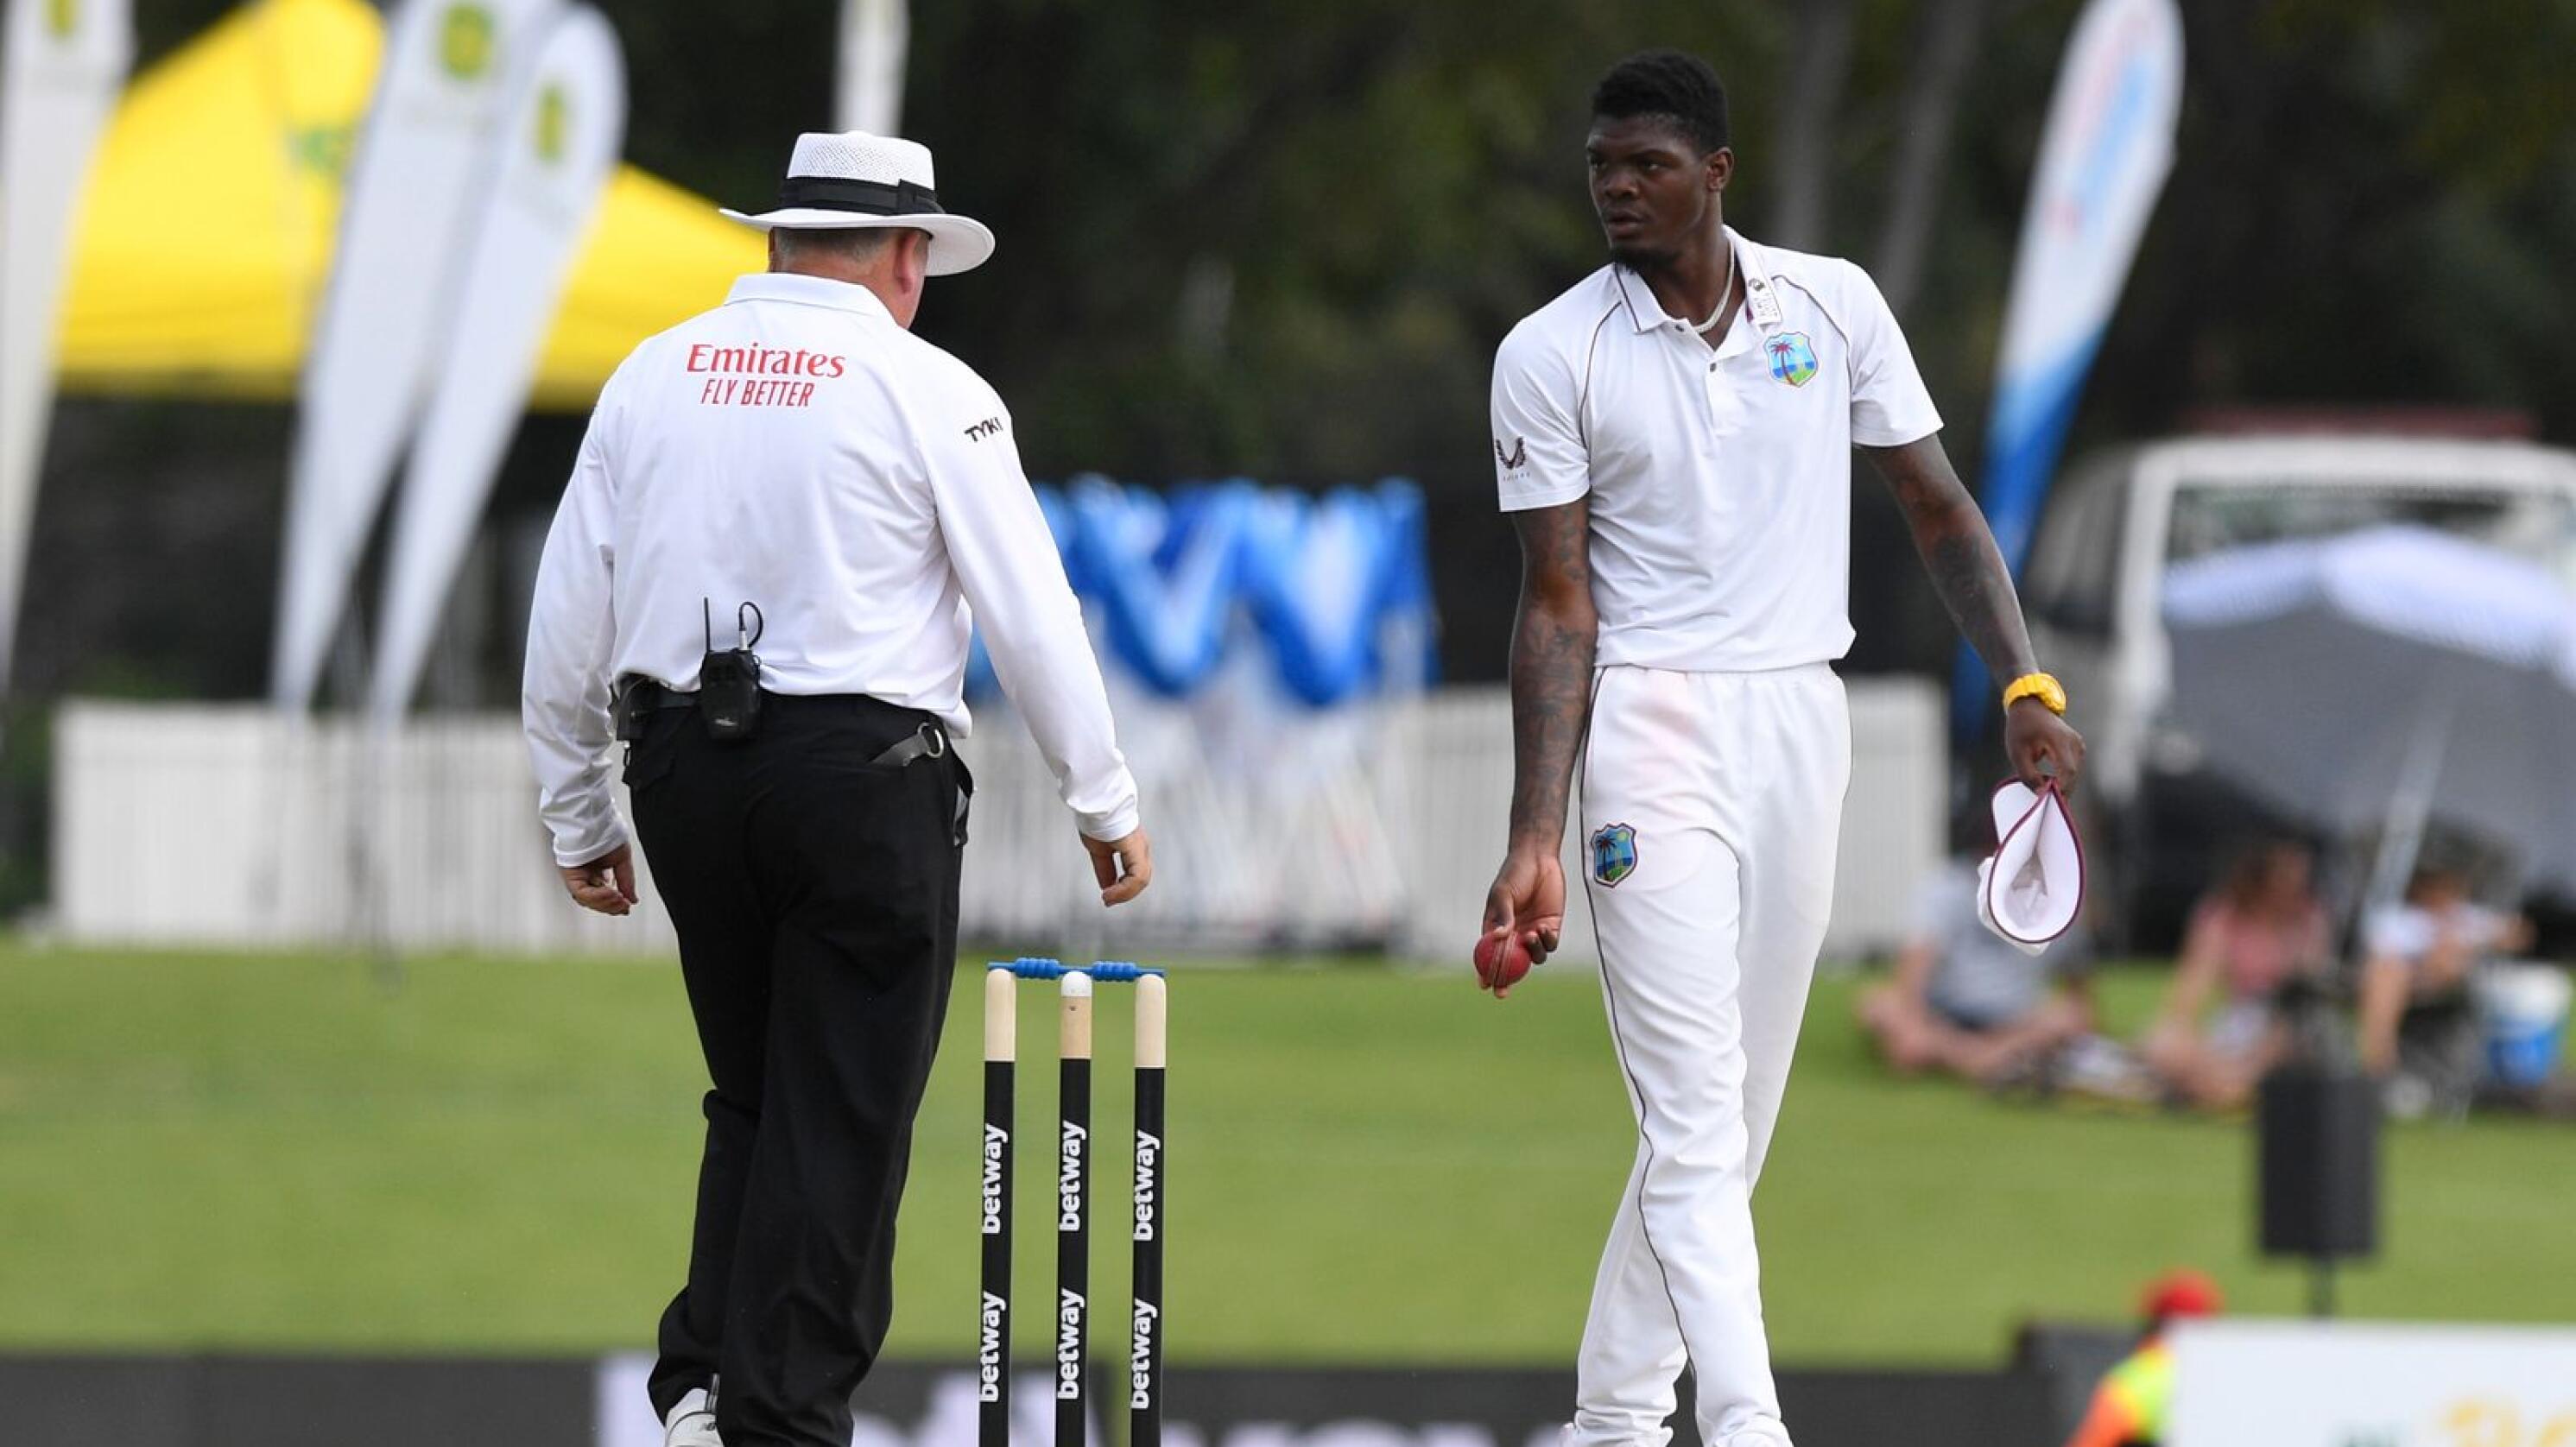 West Indies bowler Alzarri Joseph in action